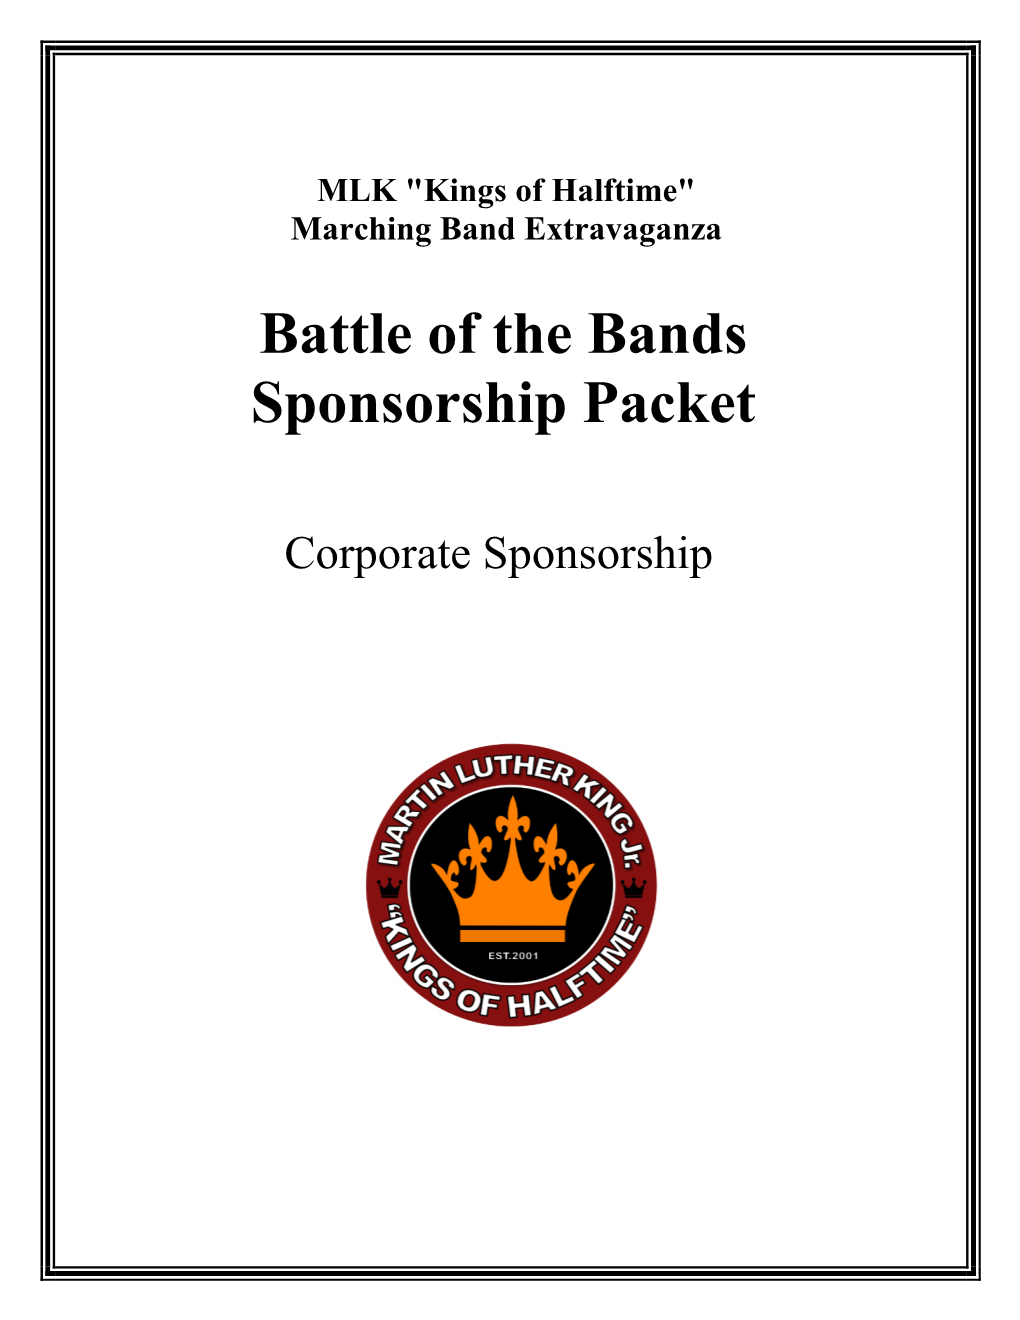 Battle of the Bands Sponsorship Packet